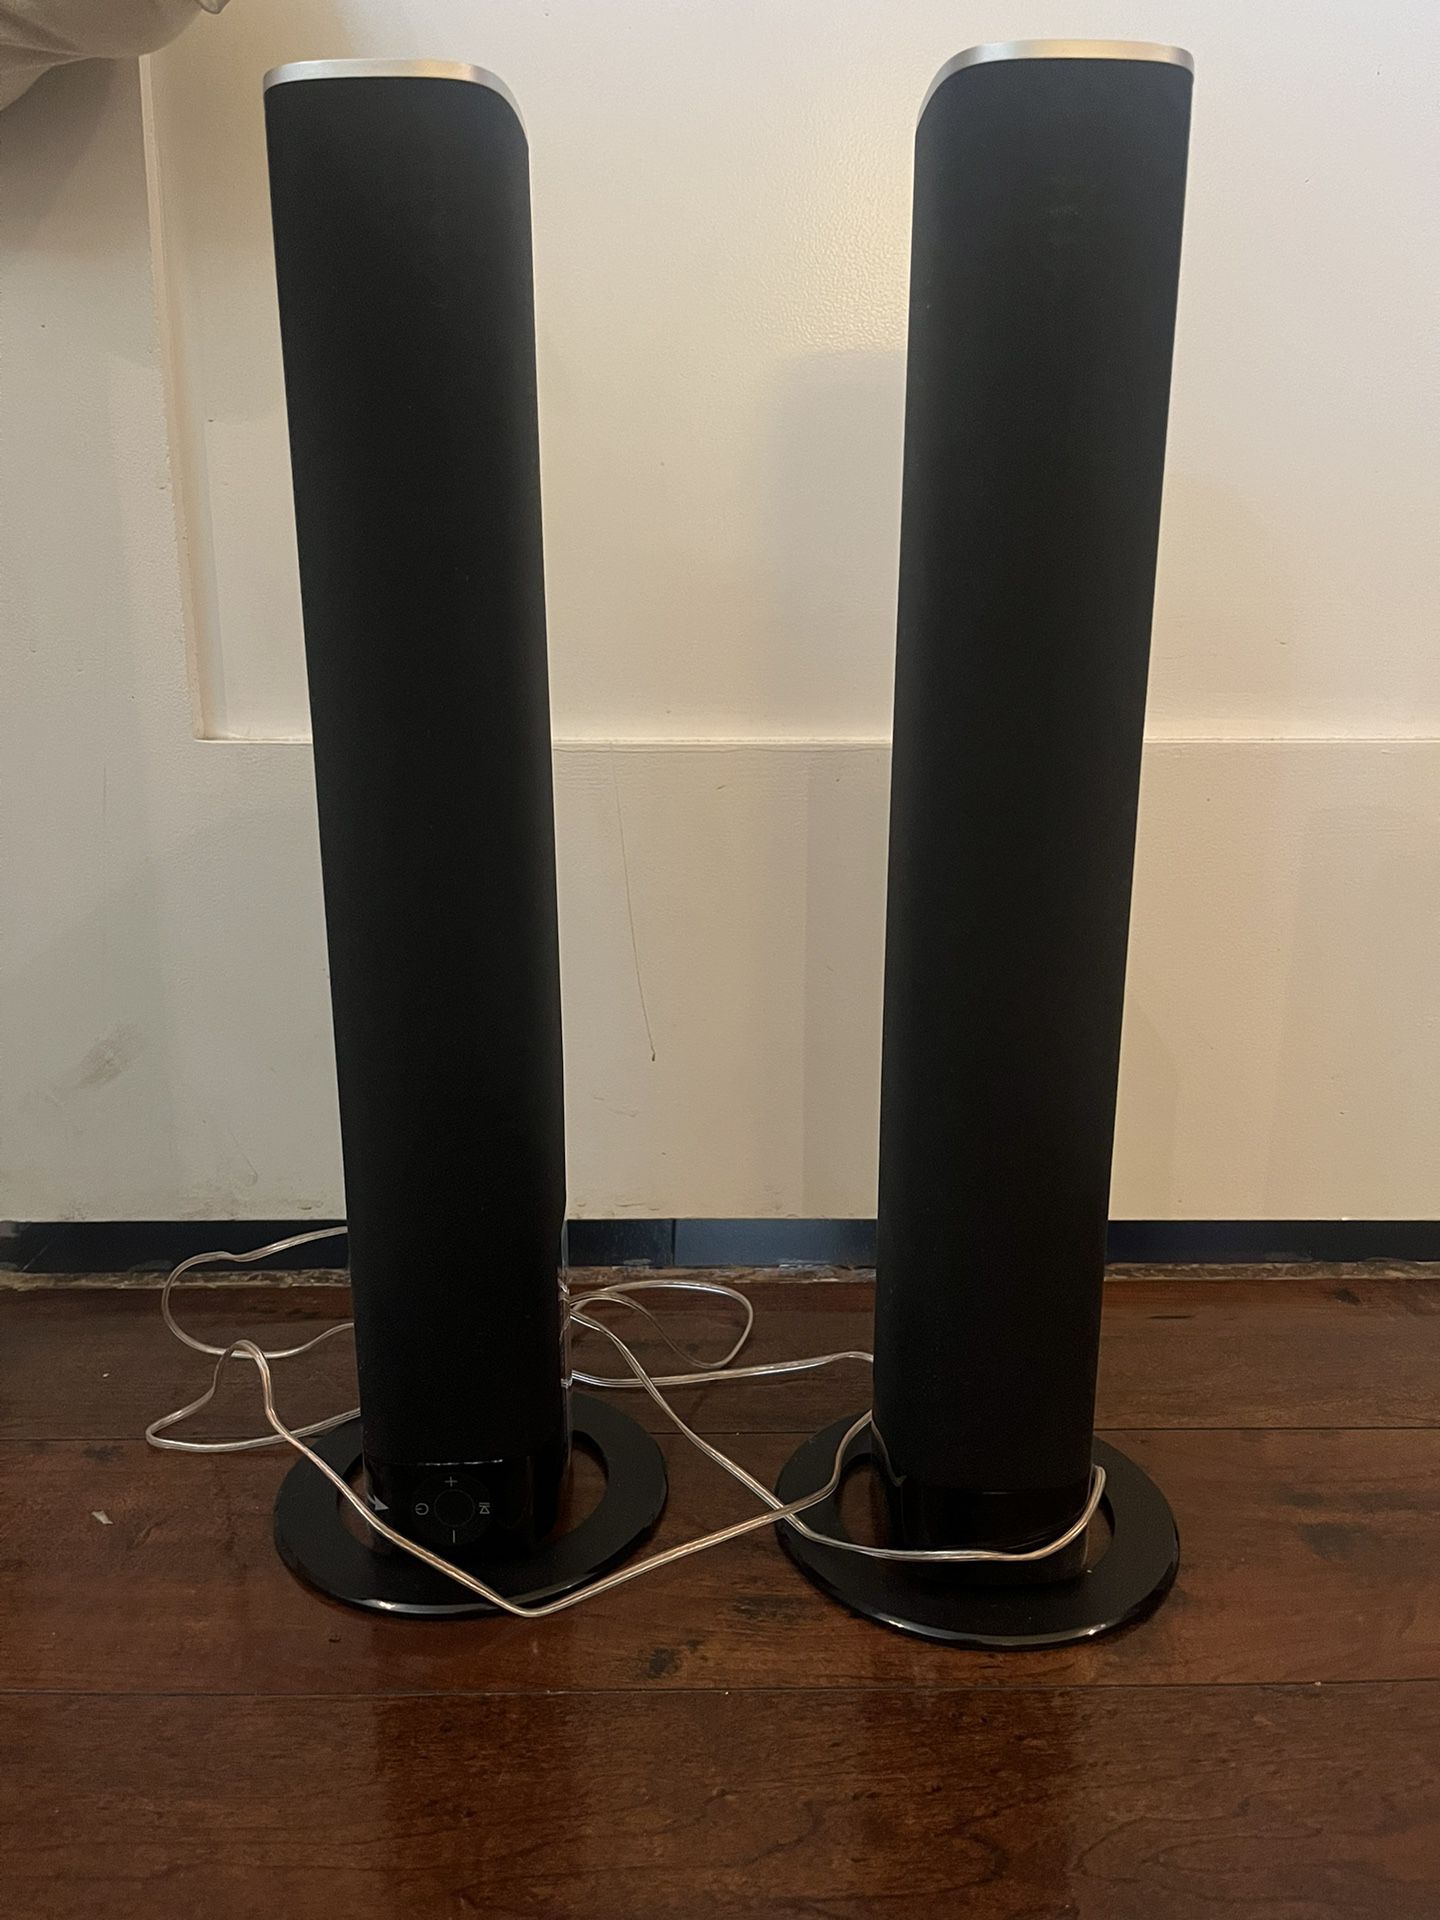 Speakers/soundbar